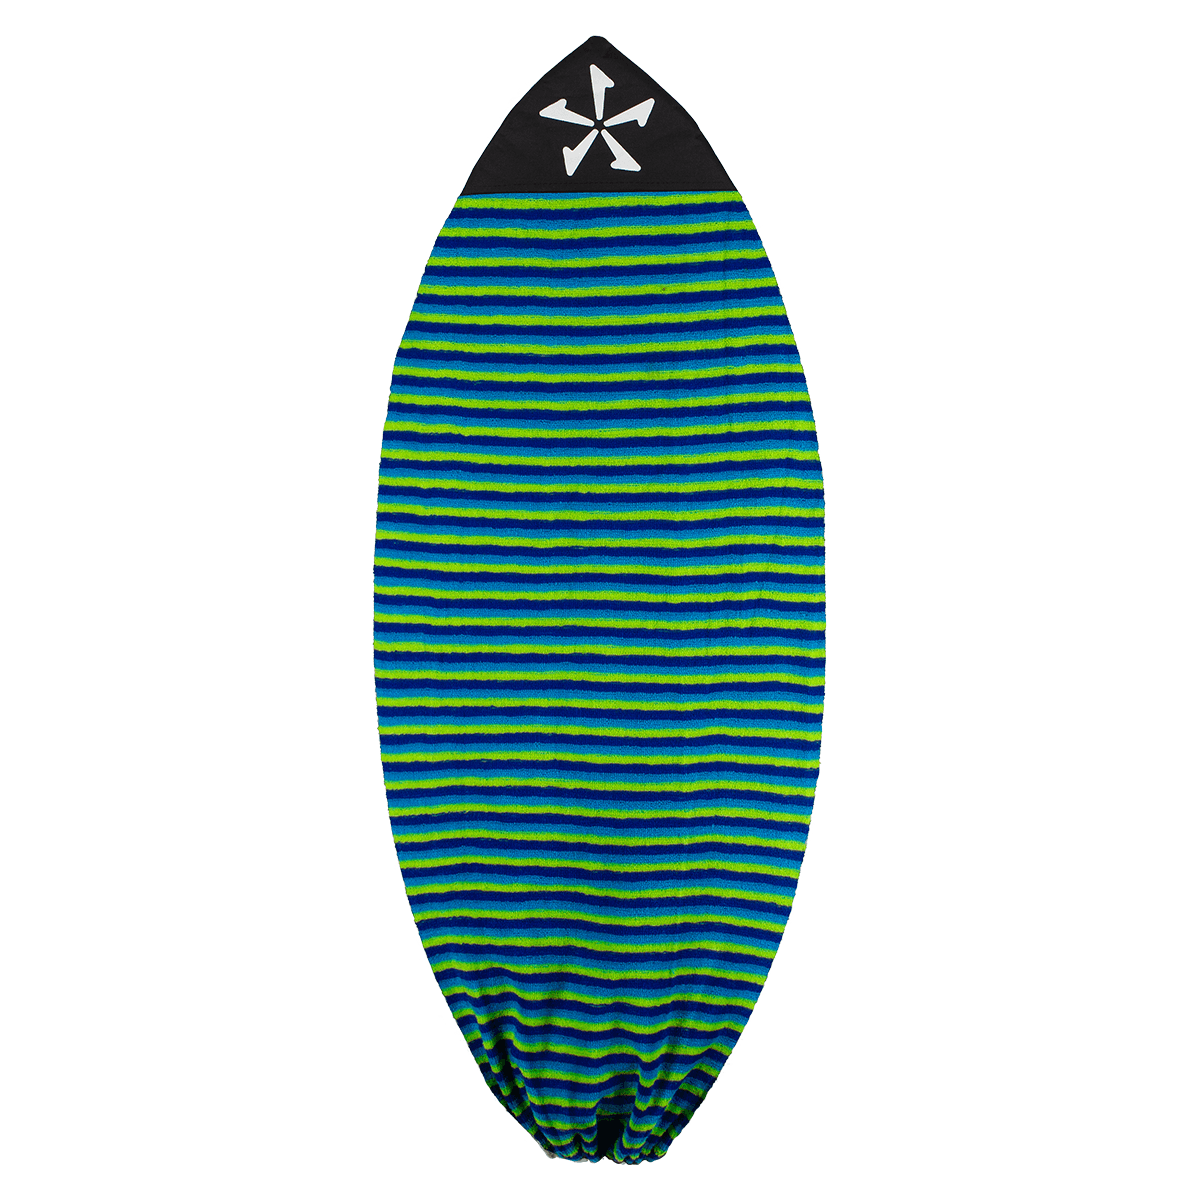 Phase 5 Wakesurf Board Sock in Lime/Blue - BoardCo